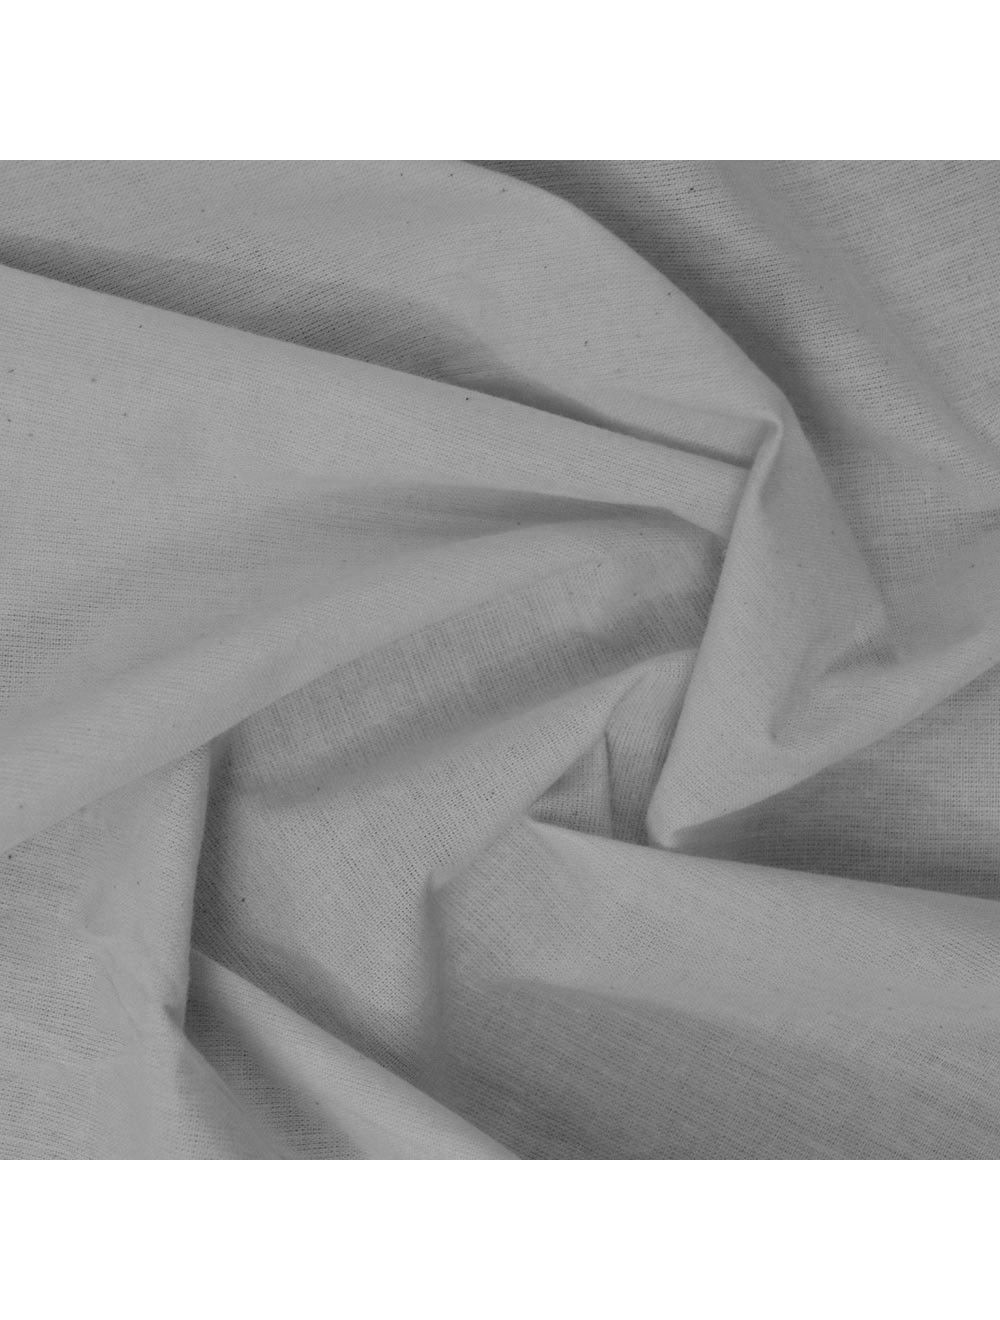 White Easy Dye Calico Cotton Fabric | Fabrics | Calico Laine